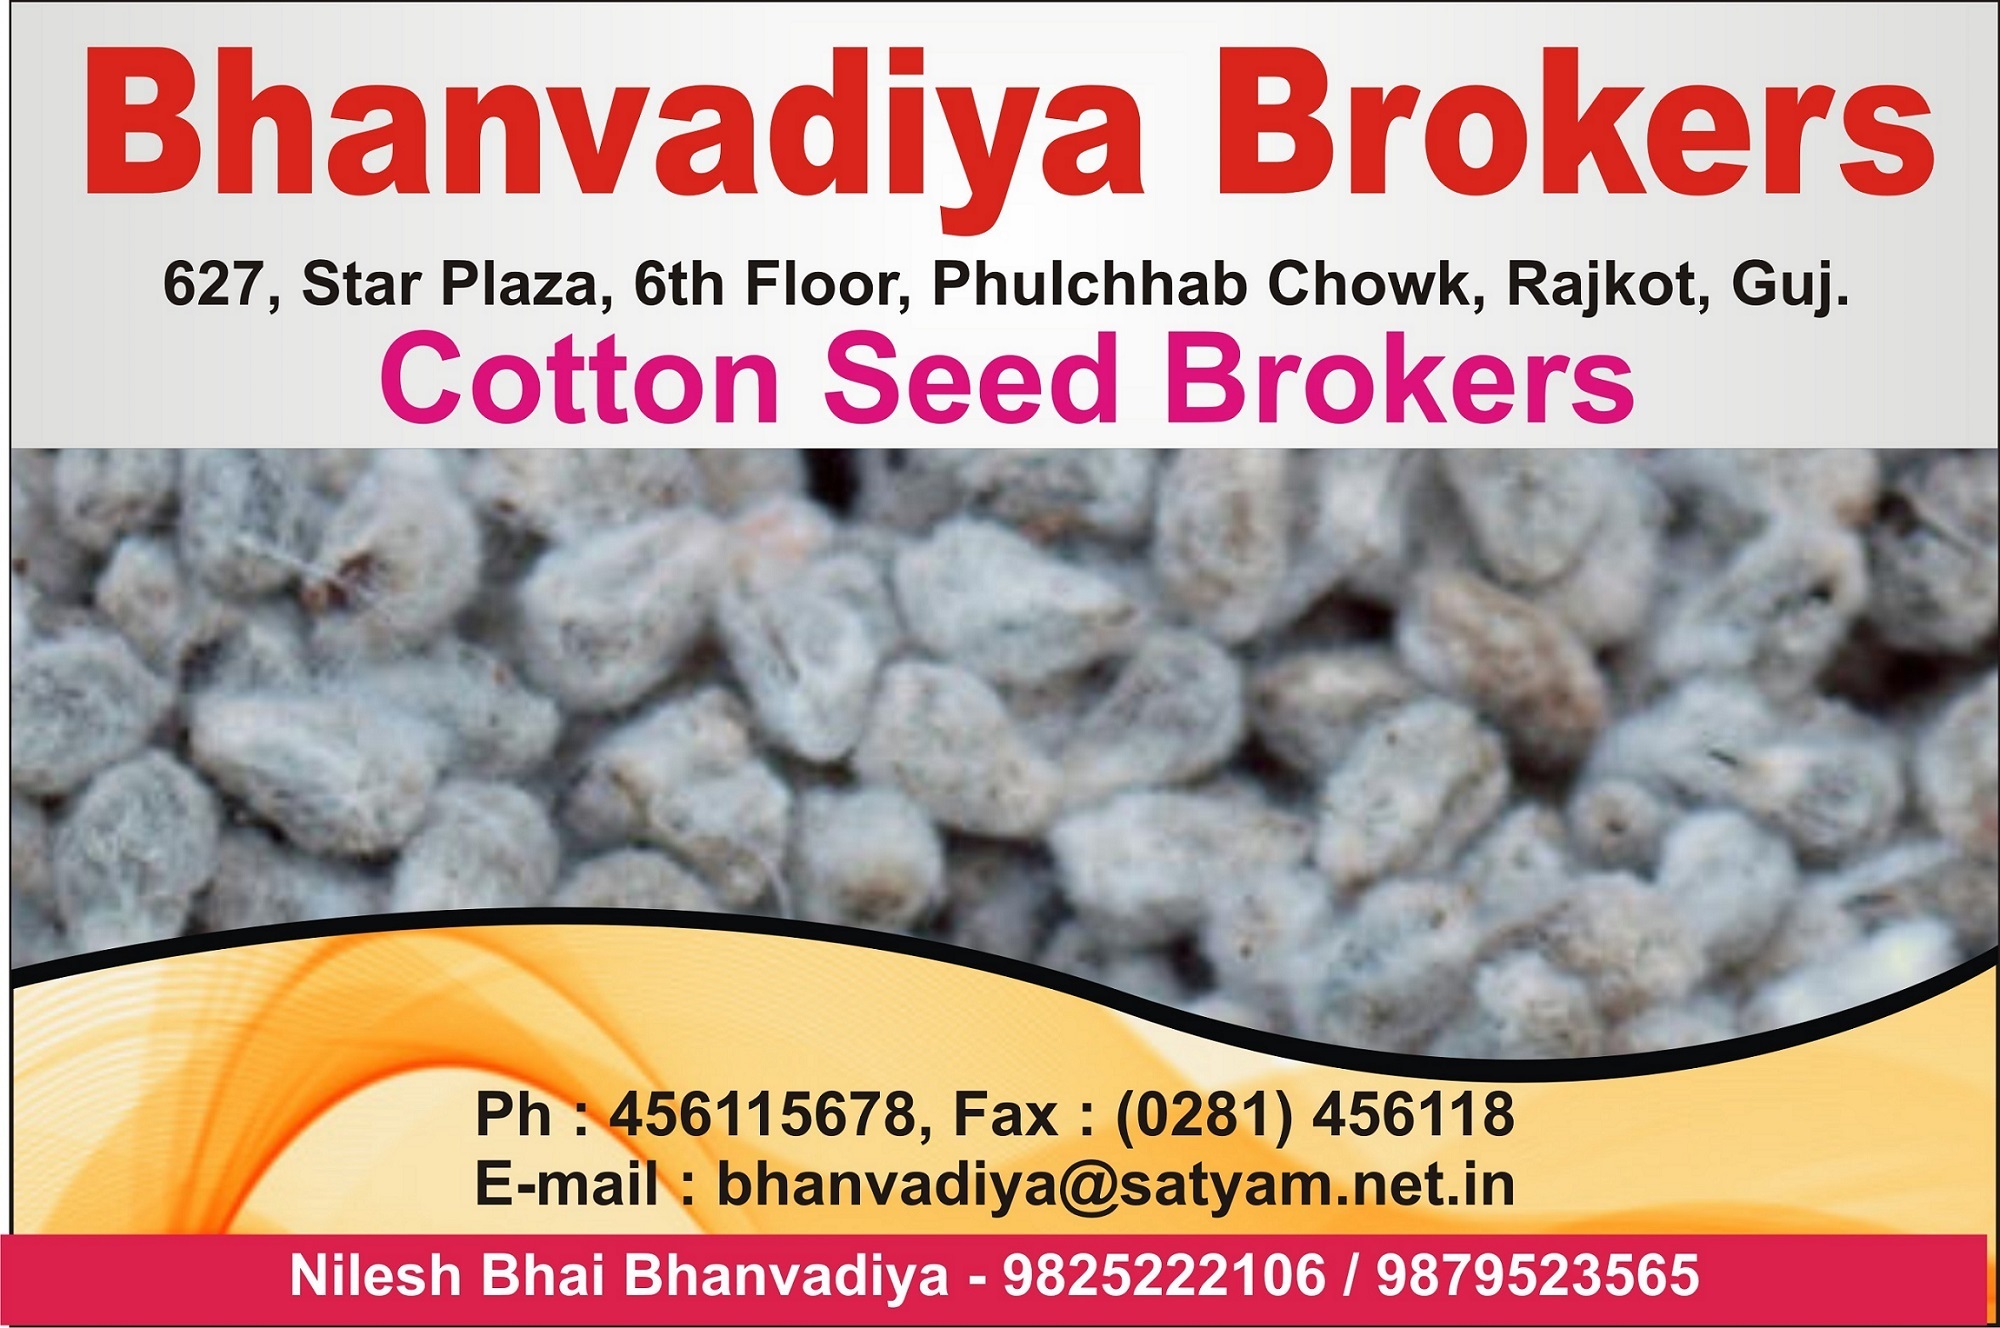 Bhanvadiya Brokers - Broker Of Cotton Seed